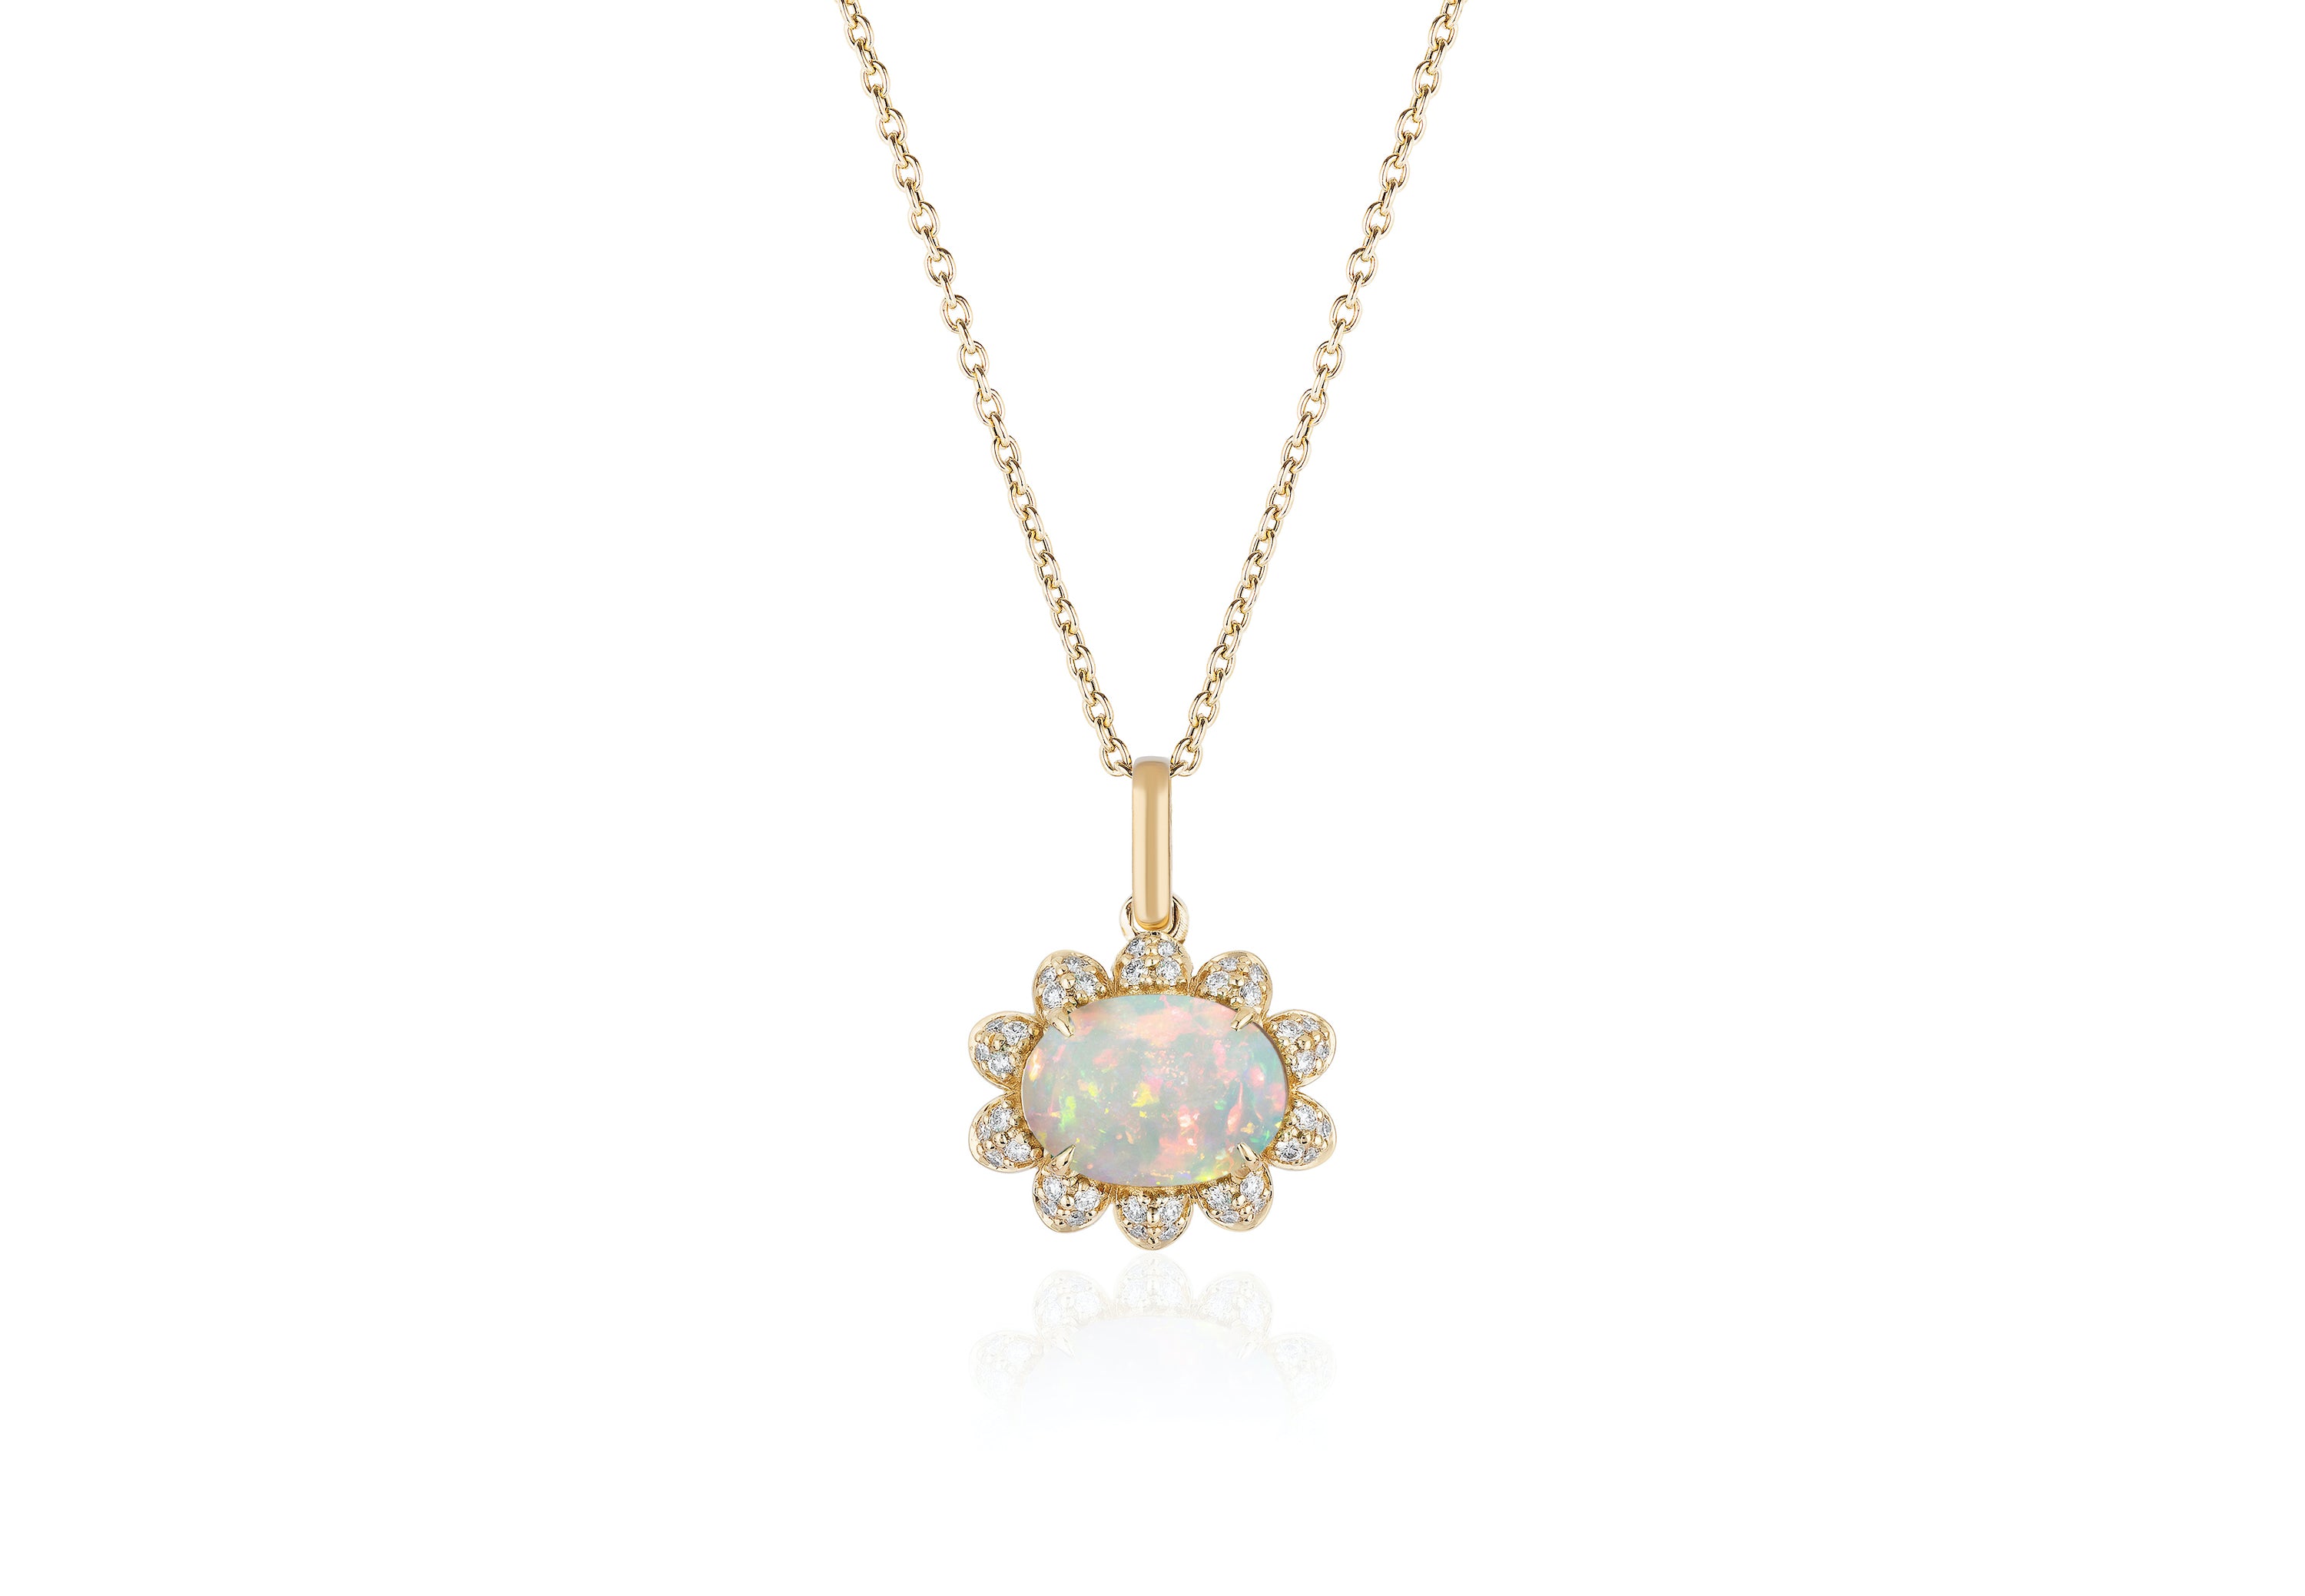 Oval  Pendant with Diamonds Necklace Pendant Goshwara Opal  